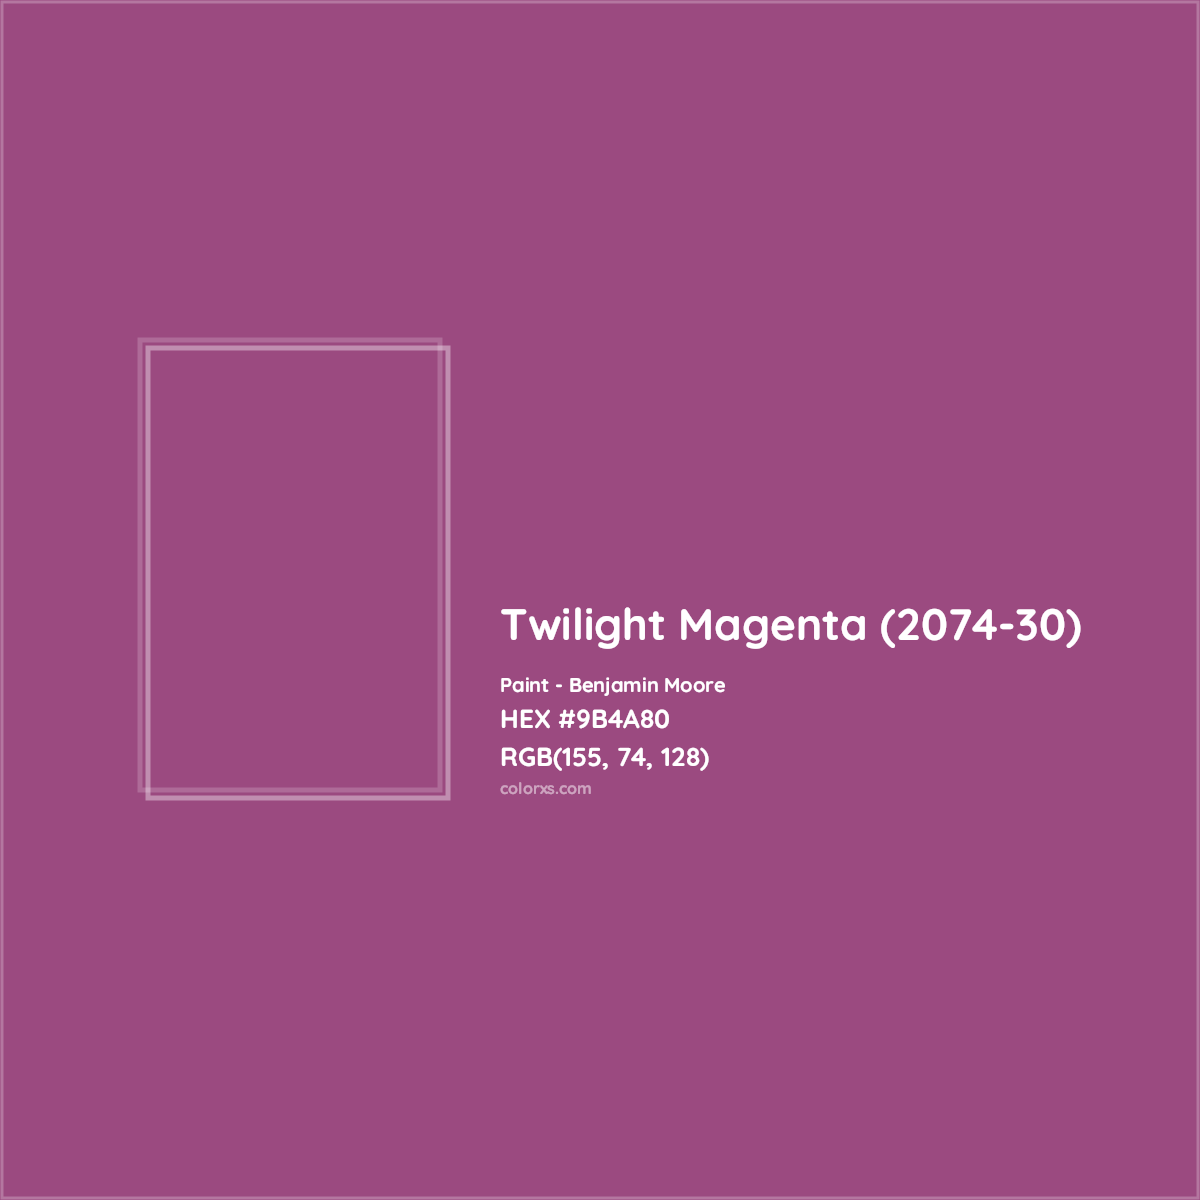 HEX #9B4A80 Twilight Magenta (2074-30) Paint Benjamin Moore - Color Code